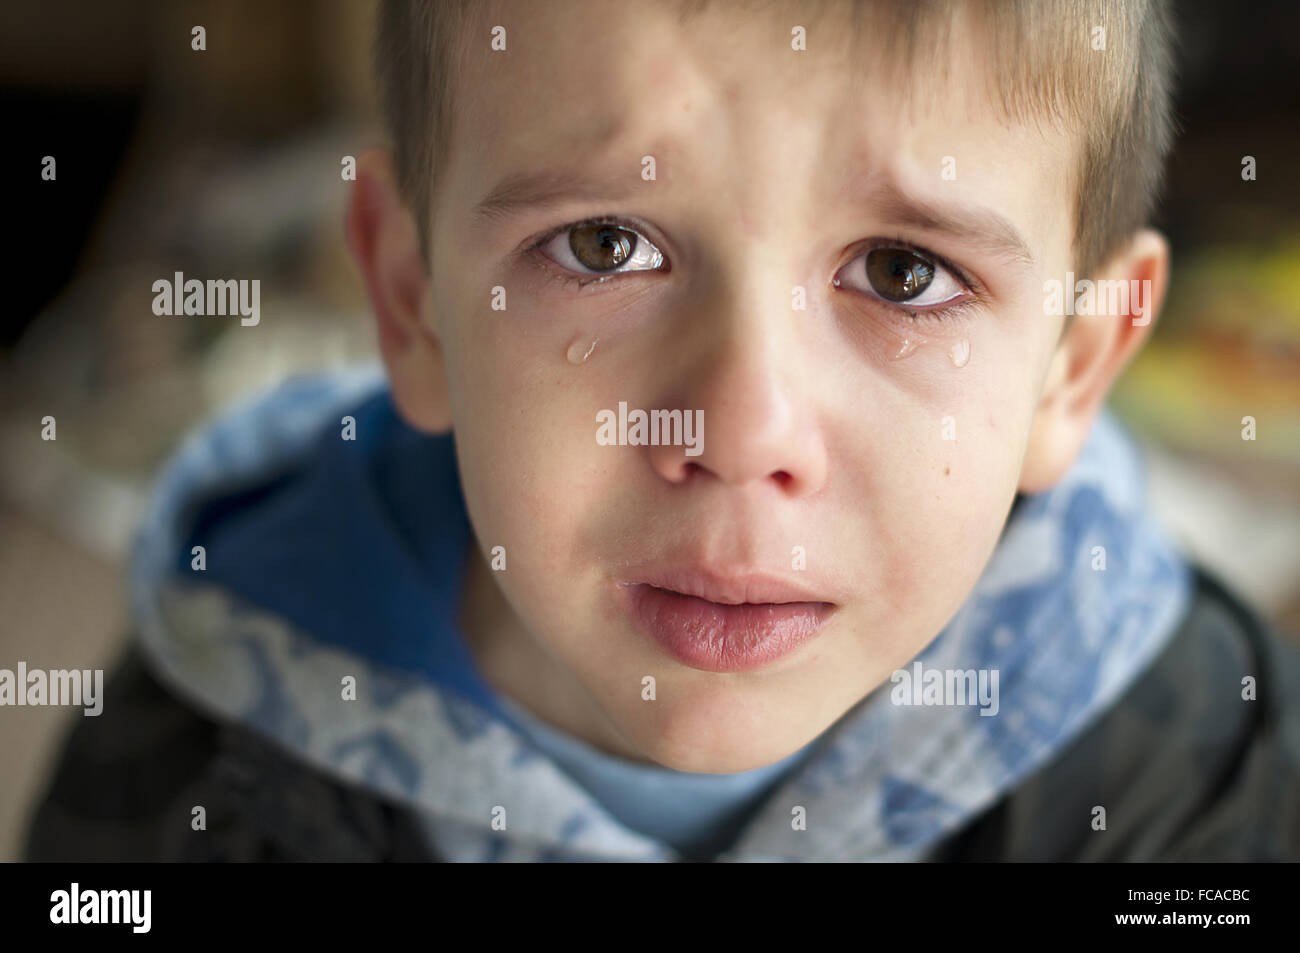 Sad child who is crying Stock Photo